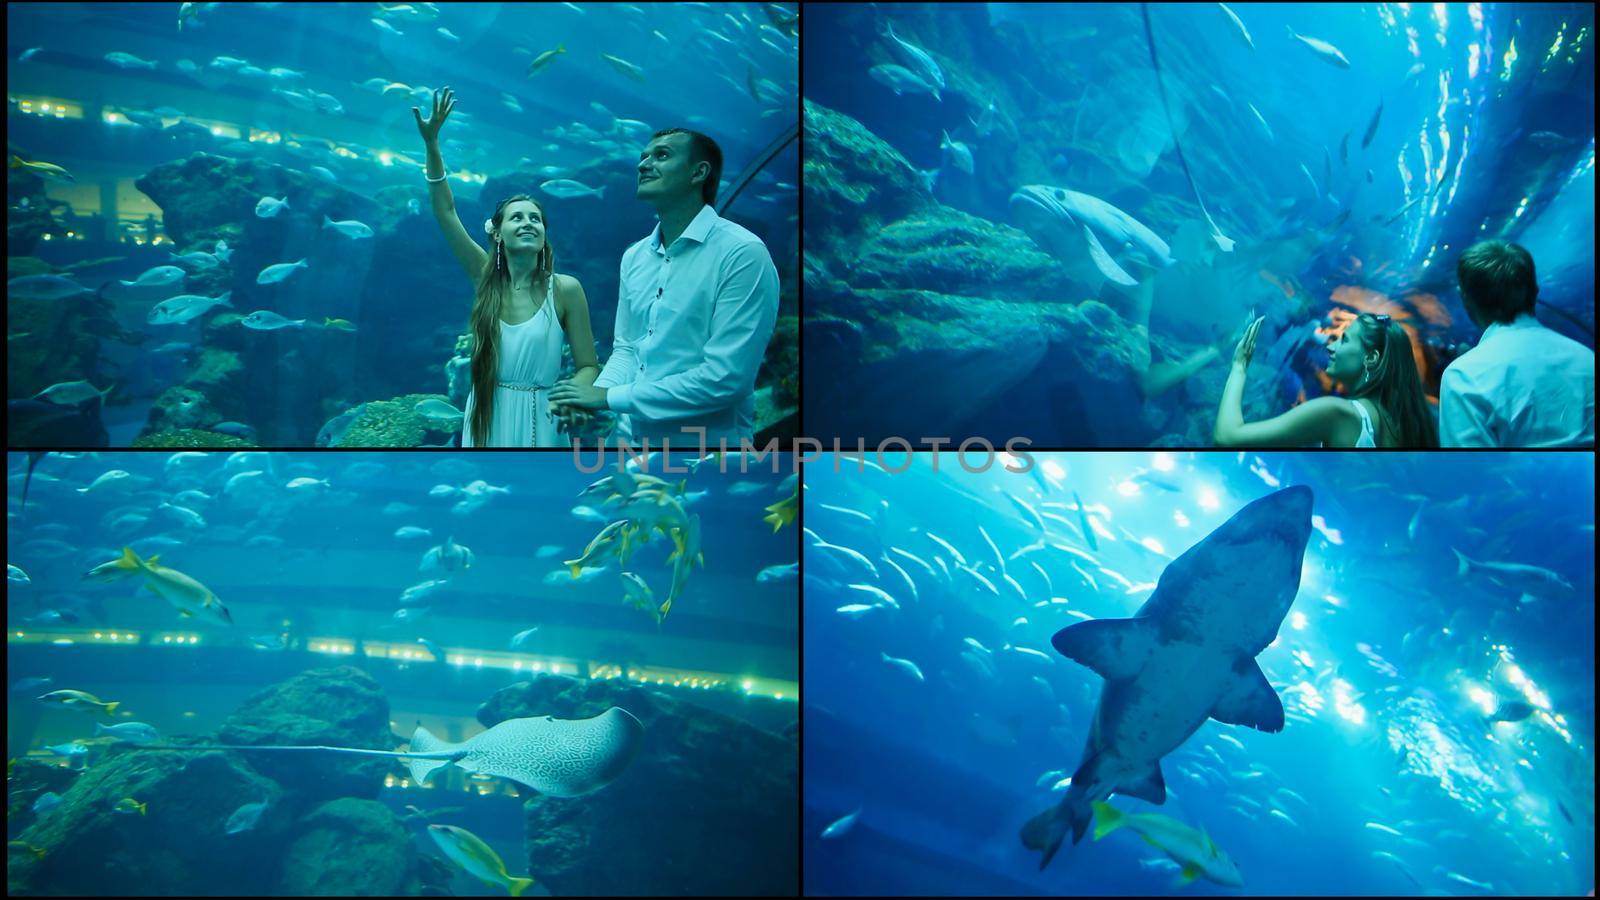 Guy and Girl walk on an underwater aquarium